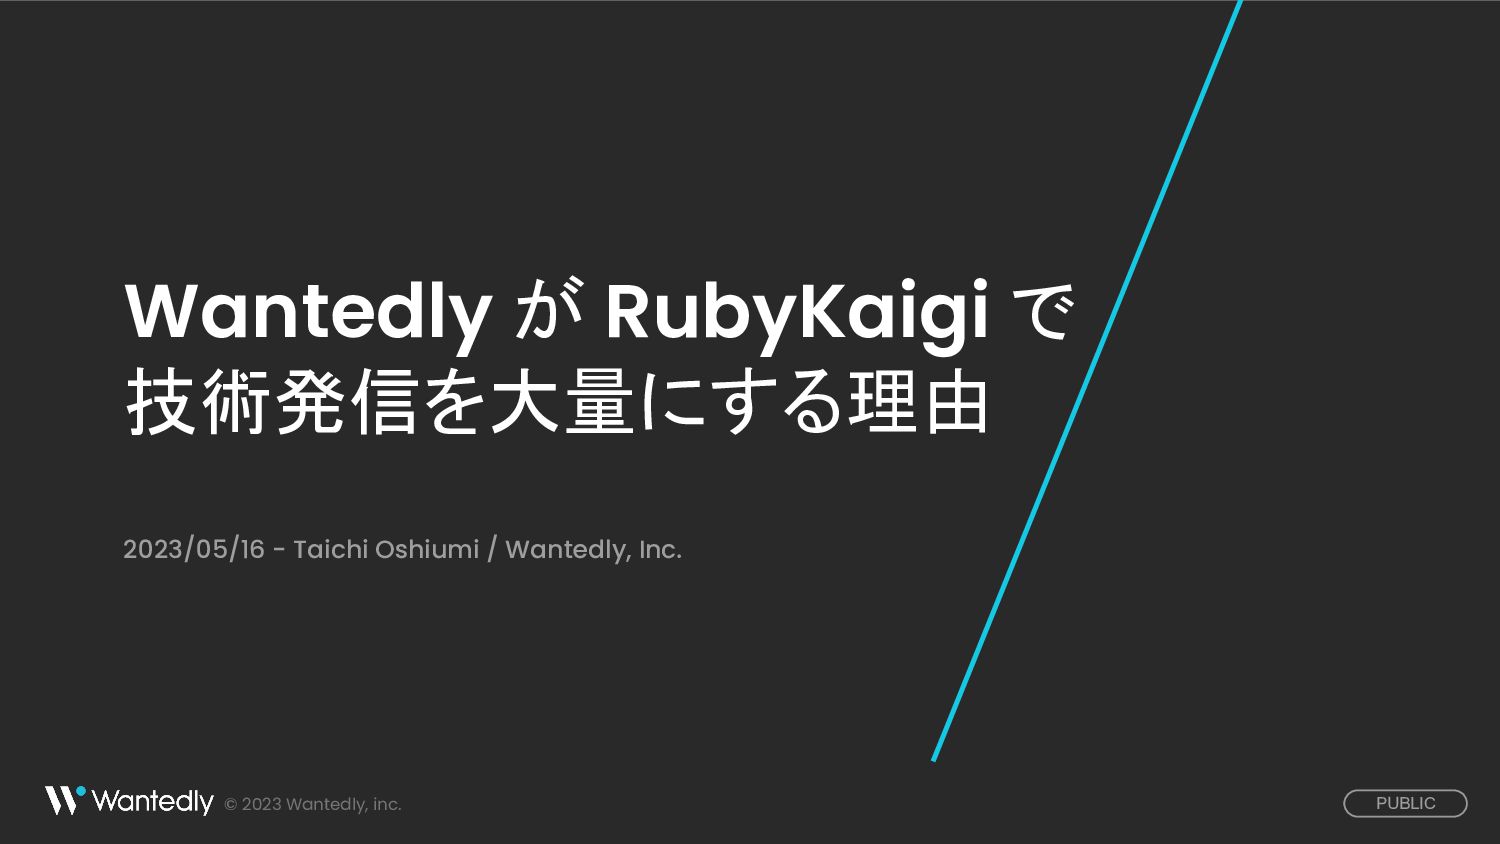 Wantedly が RubyKaigi で技術発信を大量にする理由 / Why Wantedly shares a lot of technical knowledge at RubyKaigi